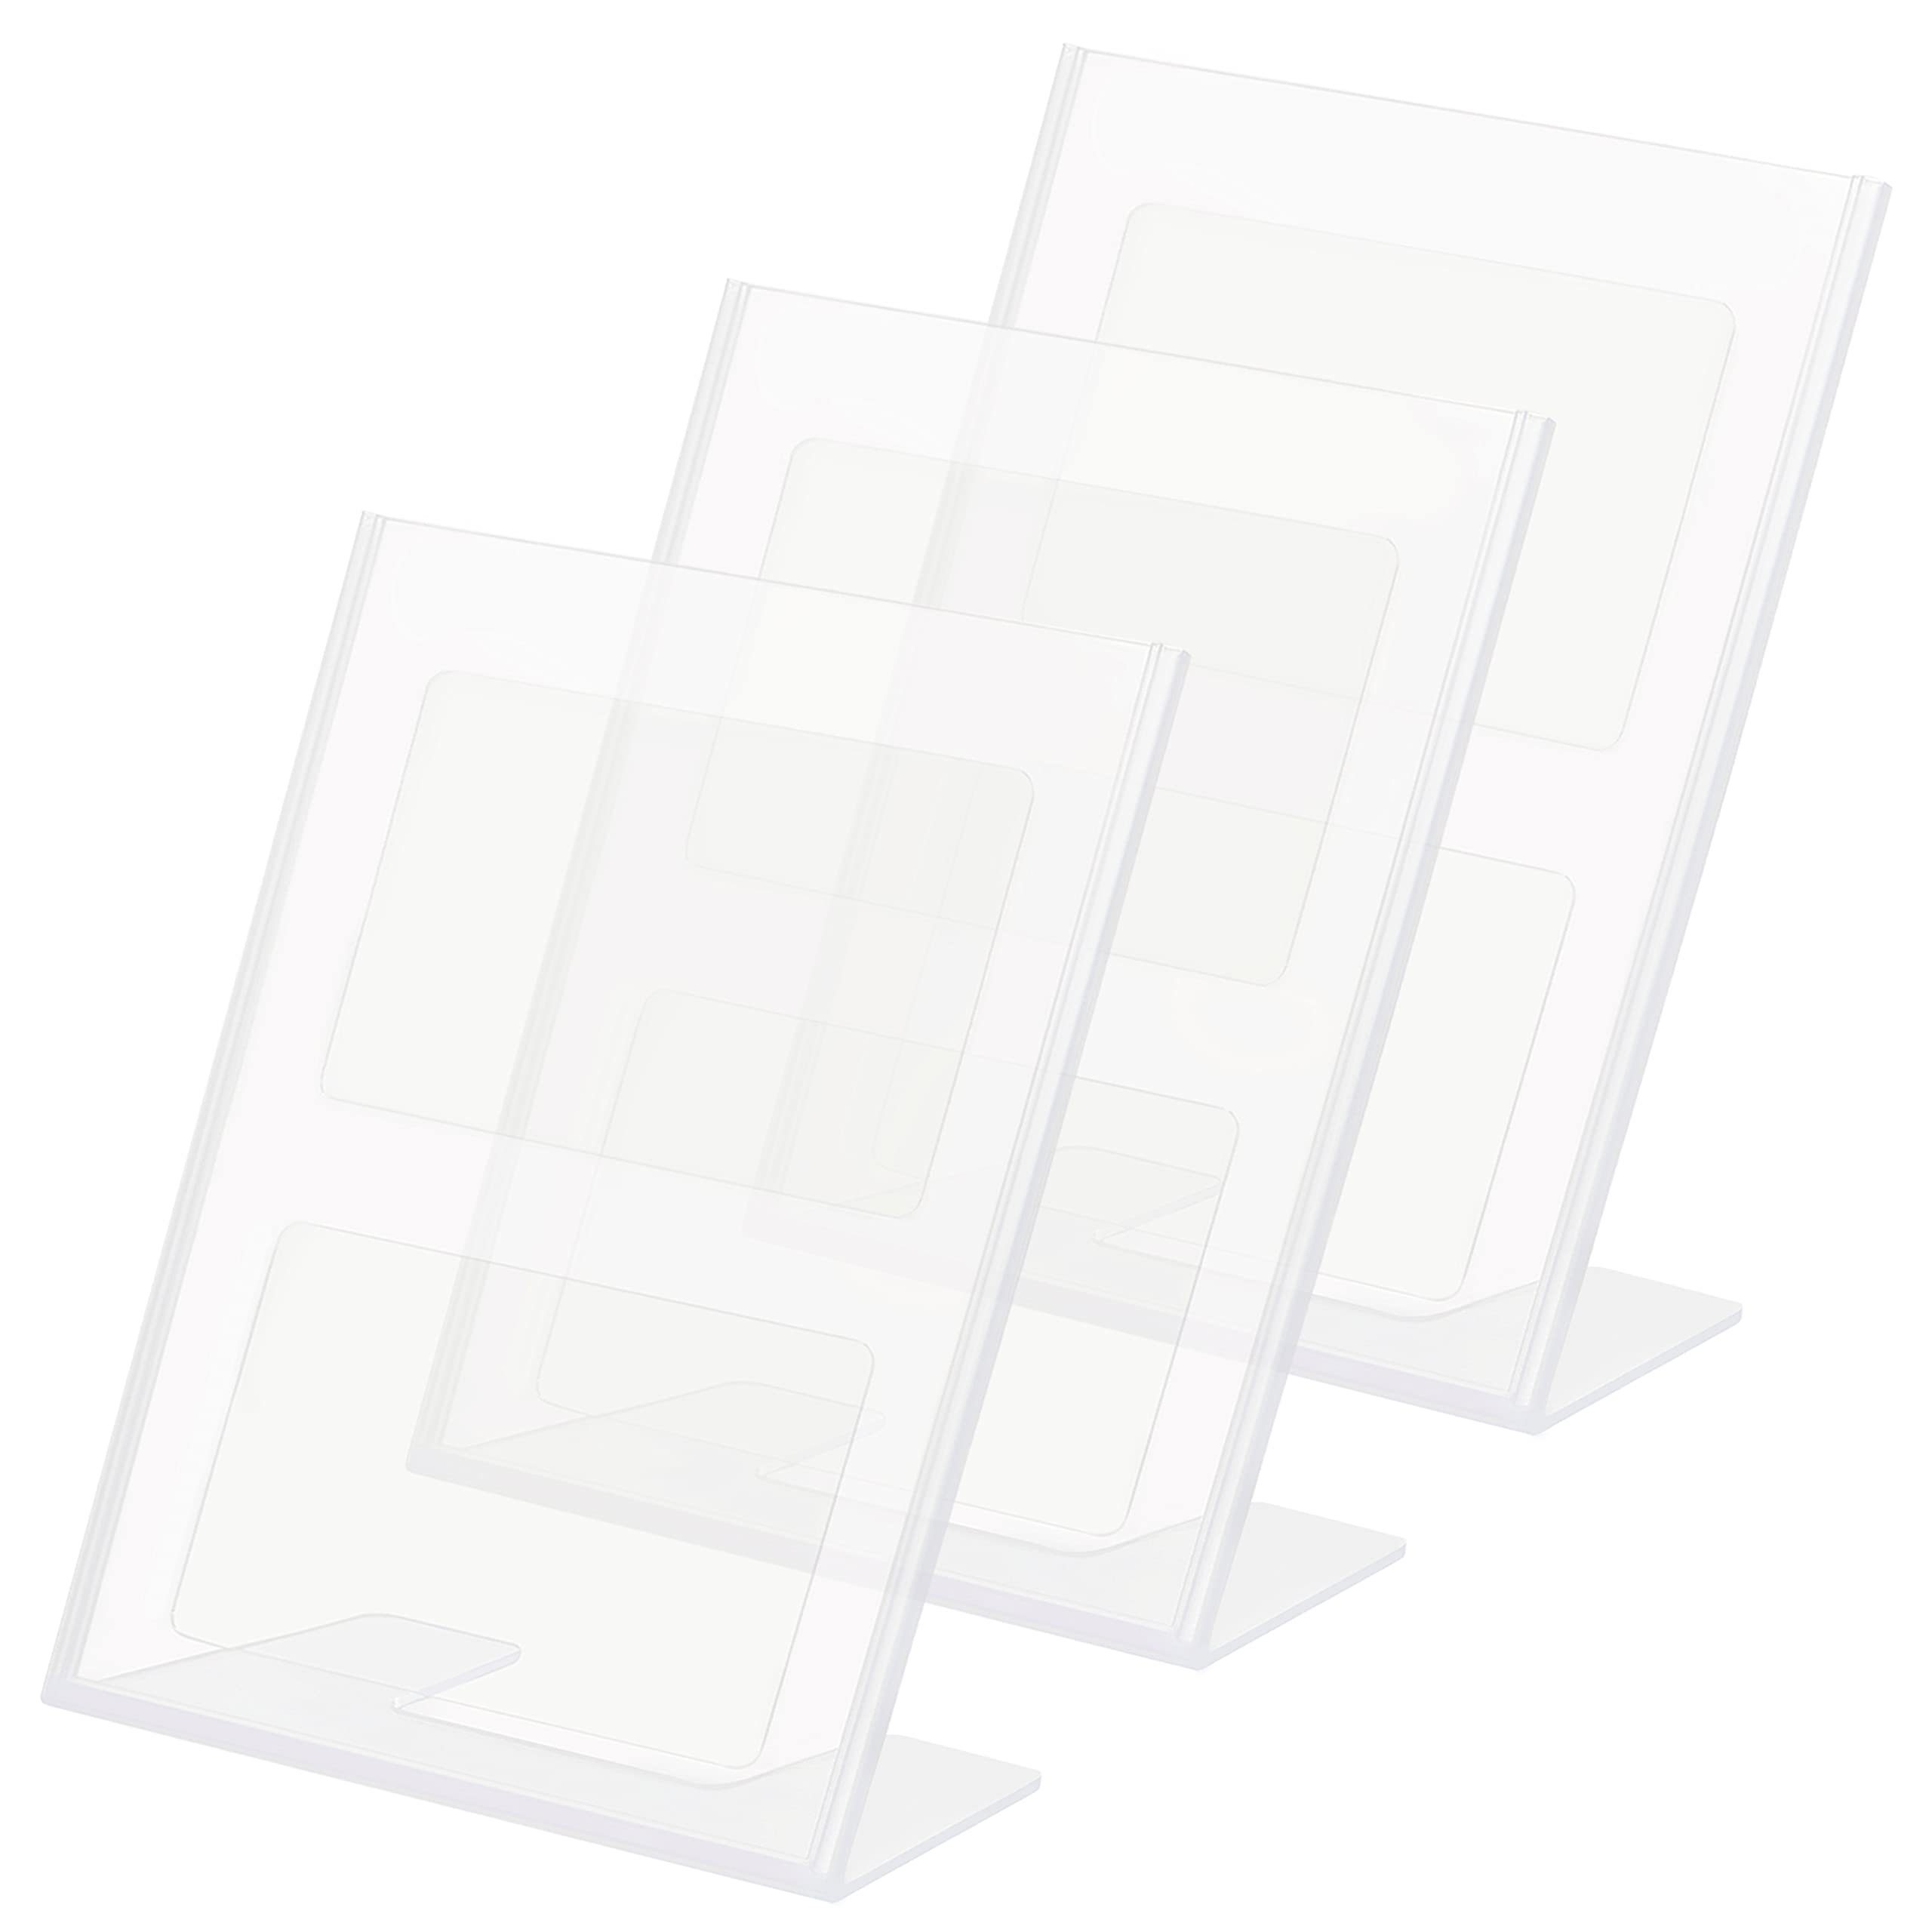 Kurtzy View Cover Transparenter Prospektständer A4 (3 Stück), Transparent Acrylaufsteller A4 (3 Stk) - Schräger Prospektständer